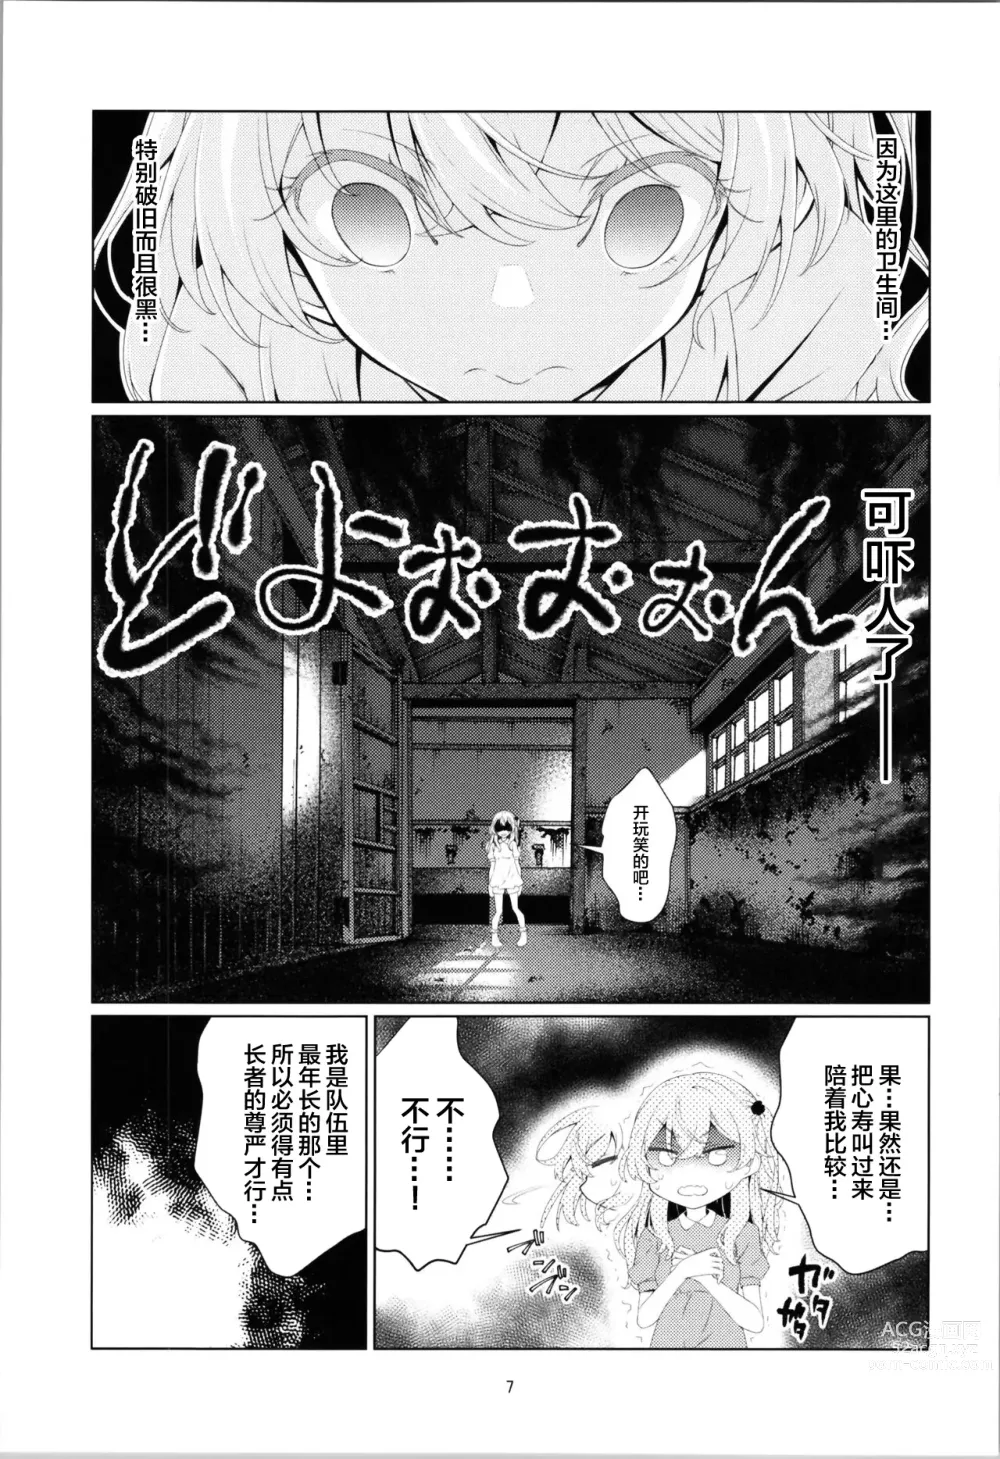 Page 7 of doujinshi Juju no Hinyou na Bouken - Jujus urinary adventure